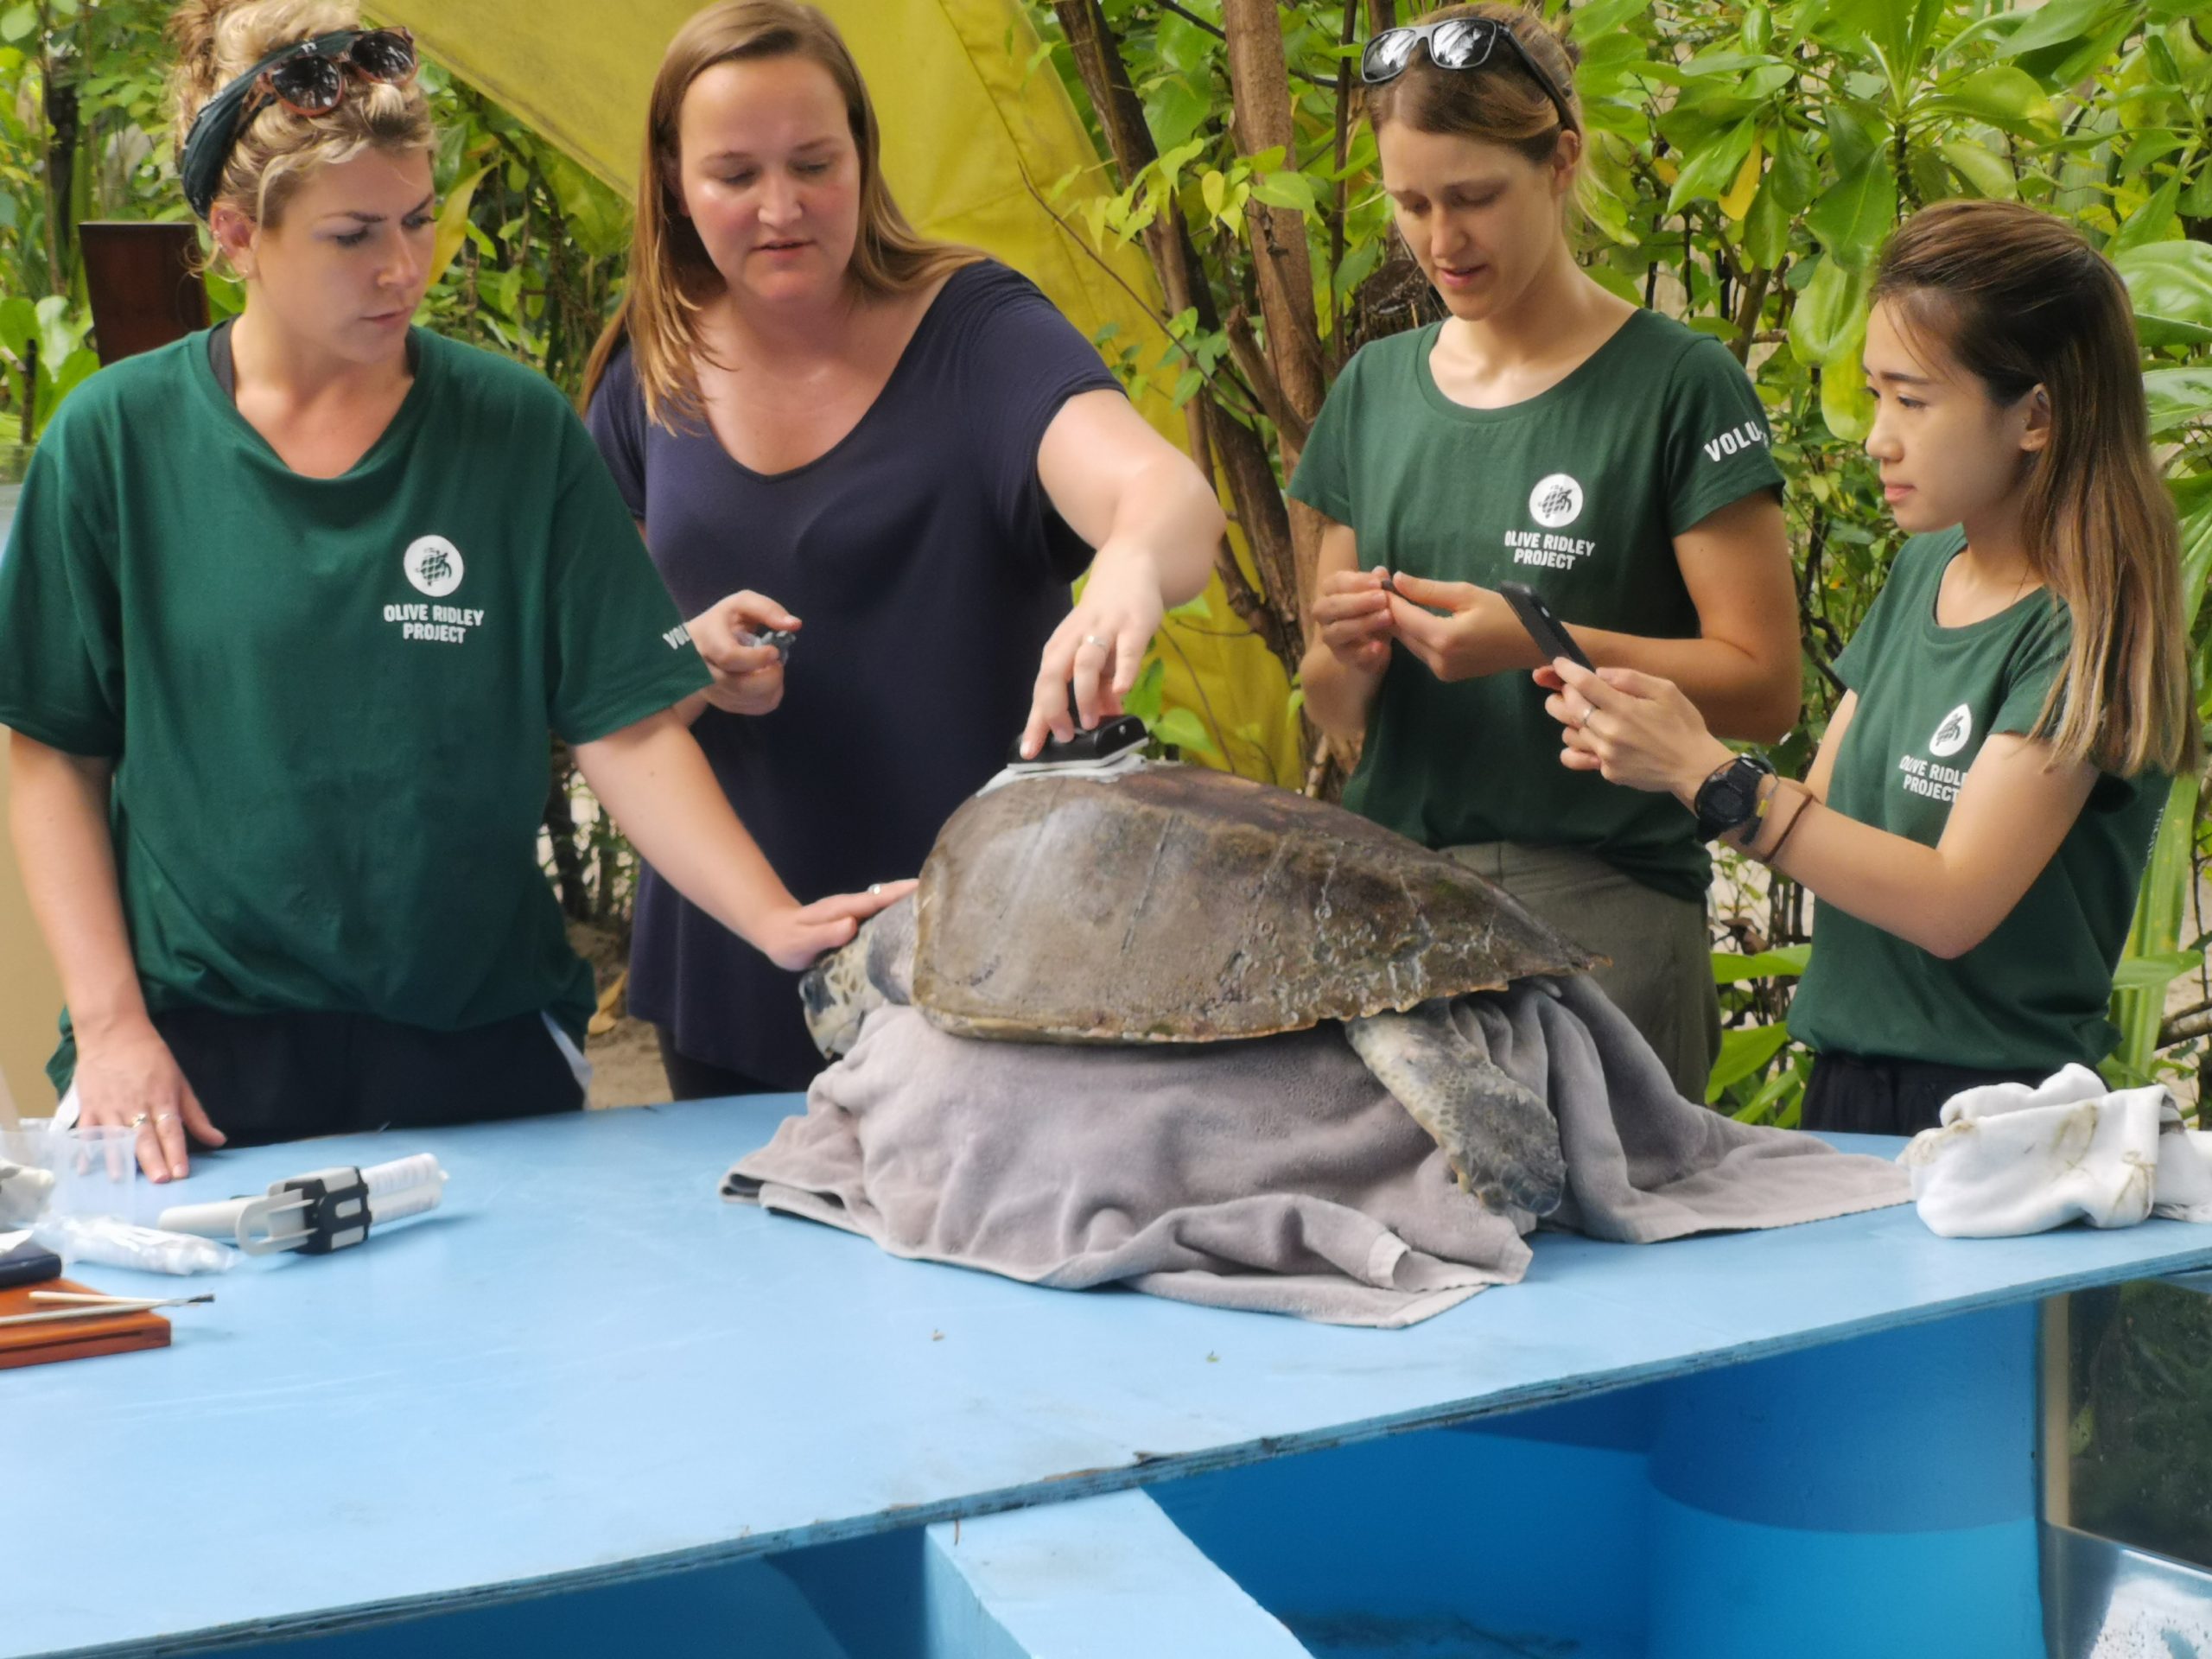 New satellite tags for rehabilitated sea turtles